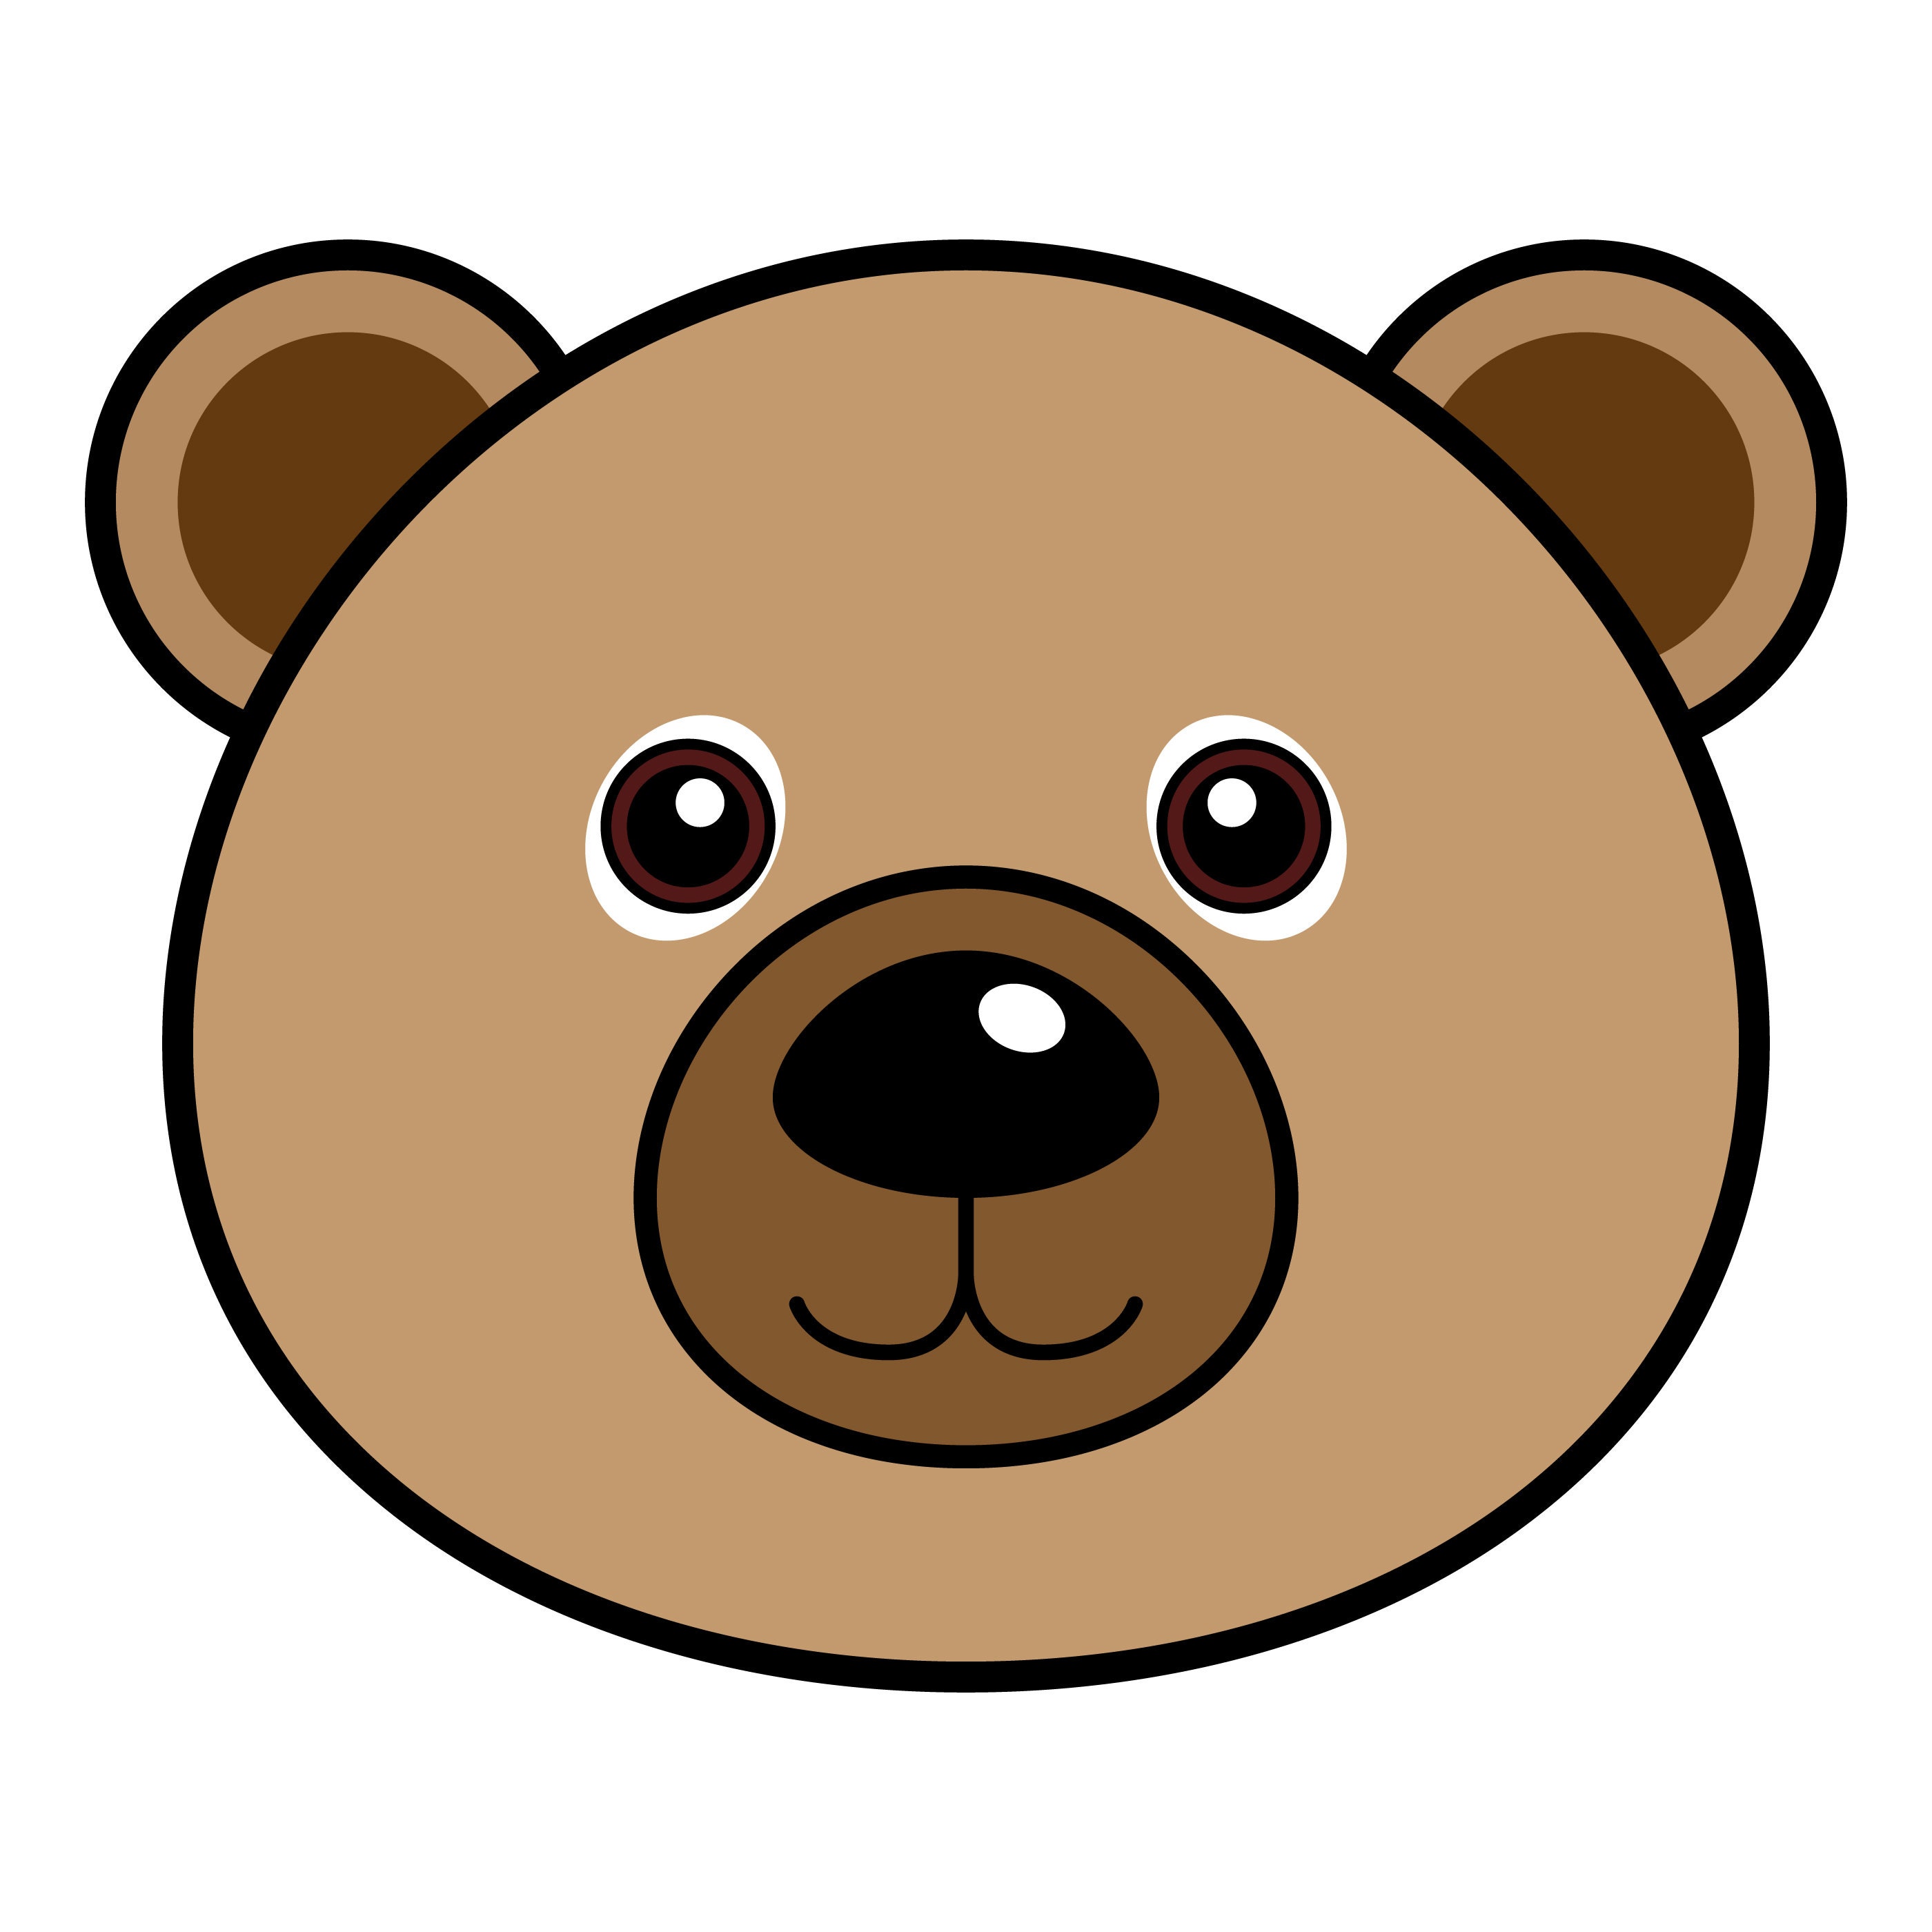 Bear face cartoon